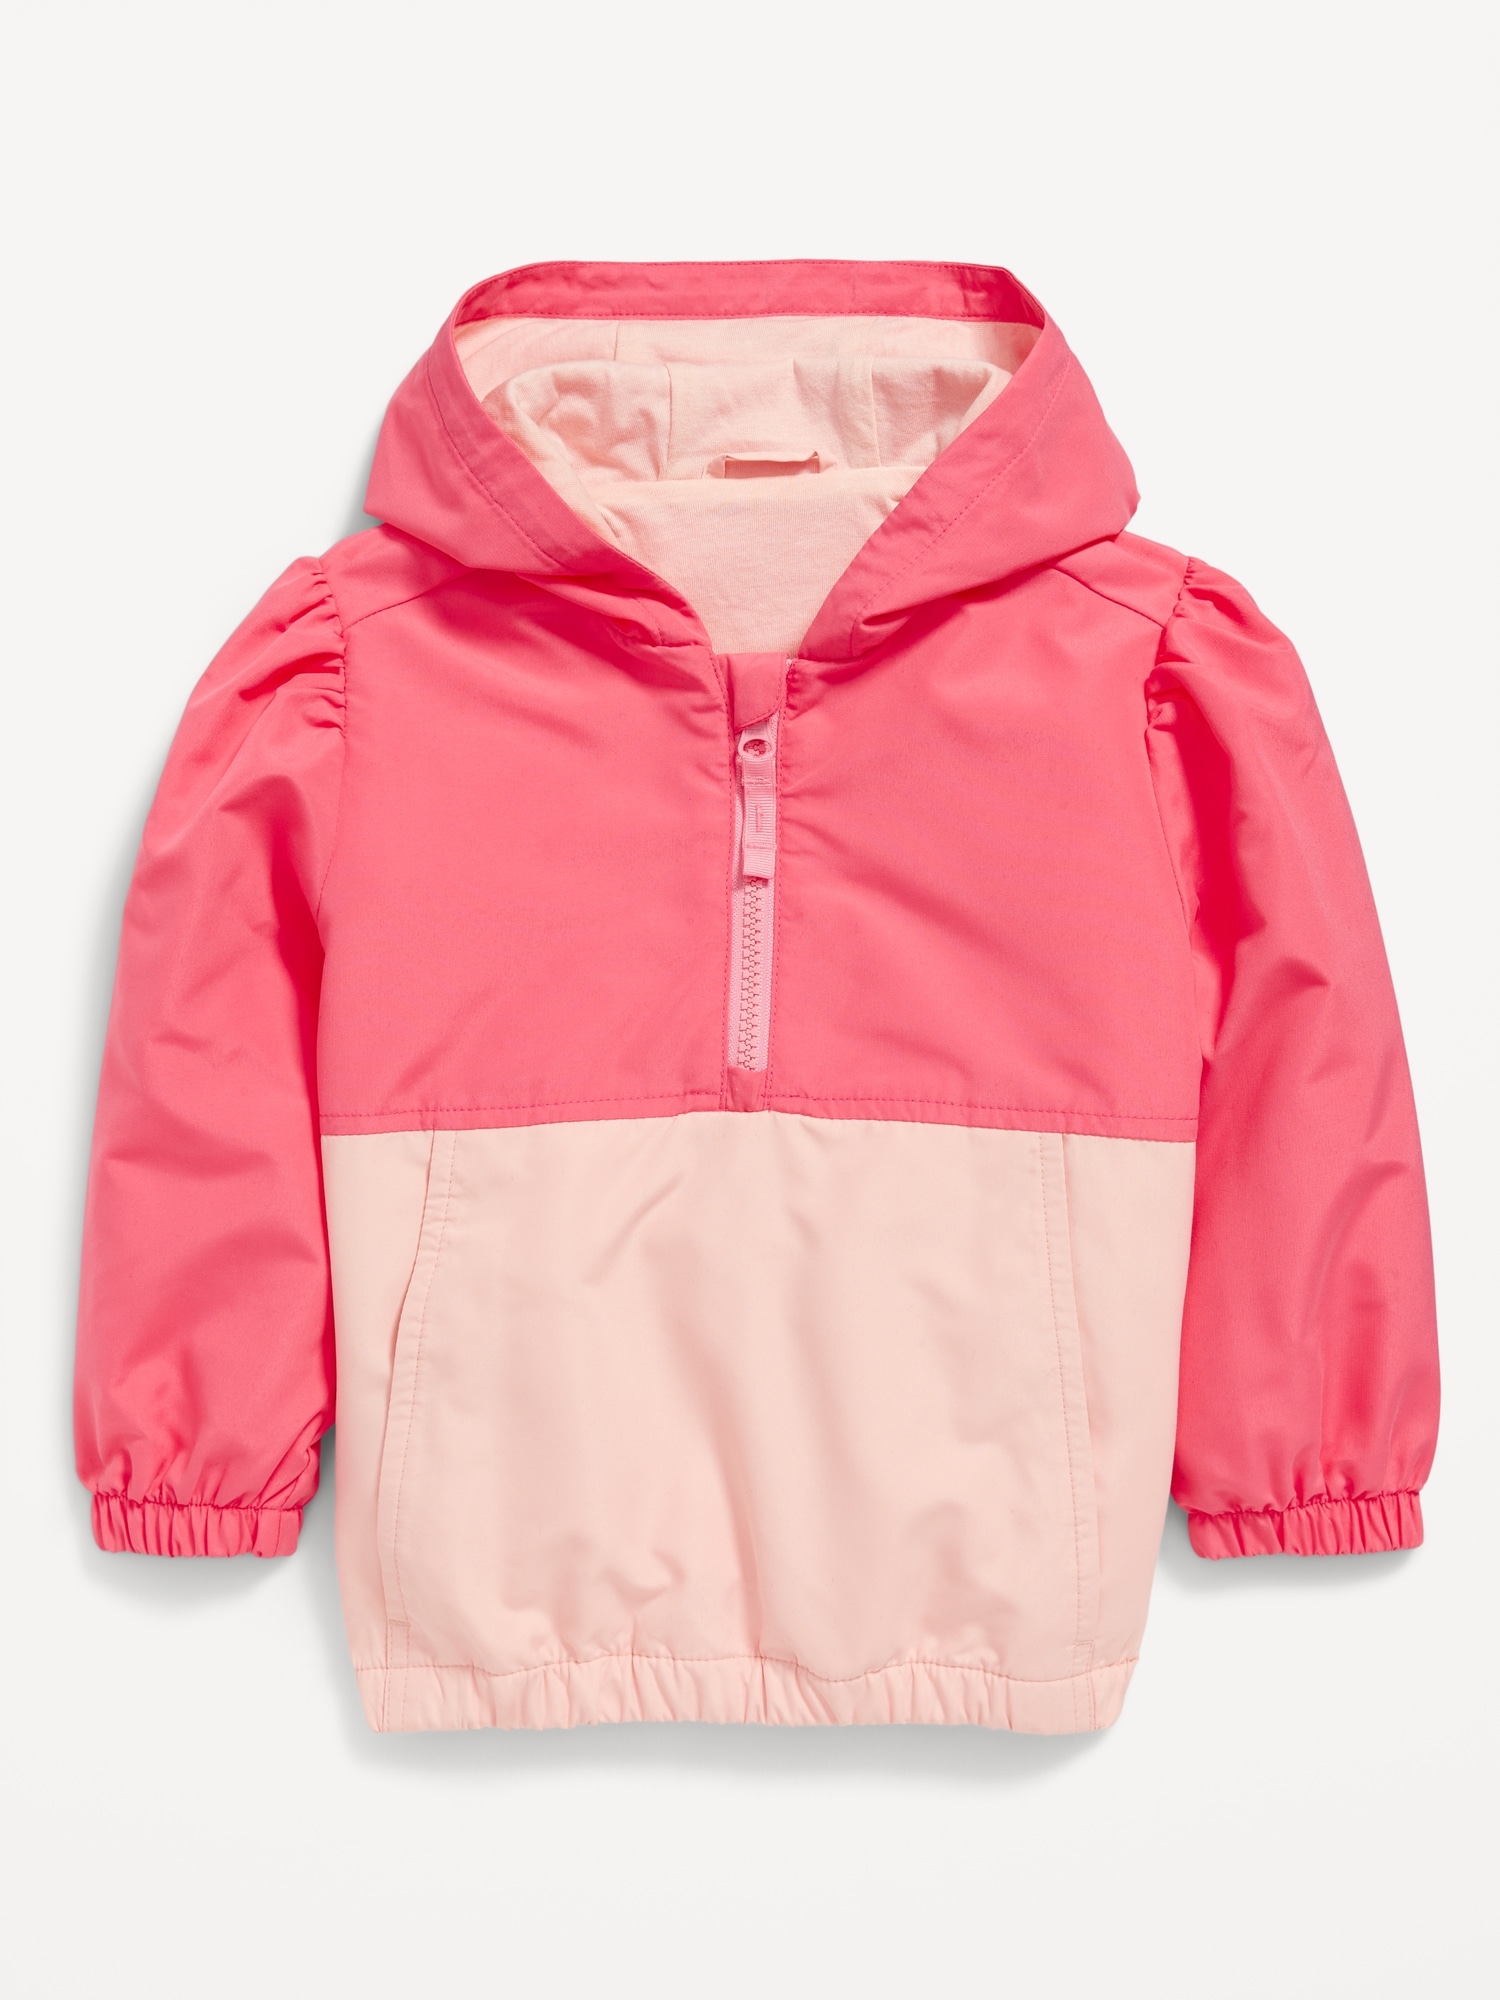 Old Navy Hooded 1/4-Zip Color-Block Pullover Windbreaker Jacket for Toddler Girls pink. 1